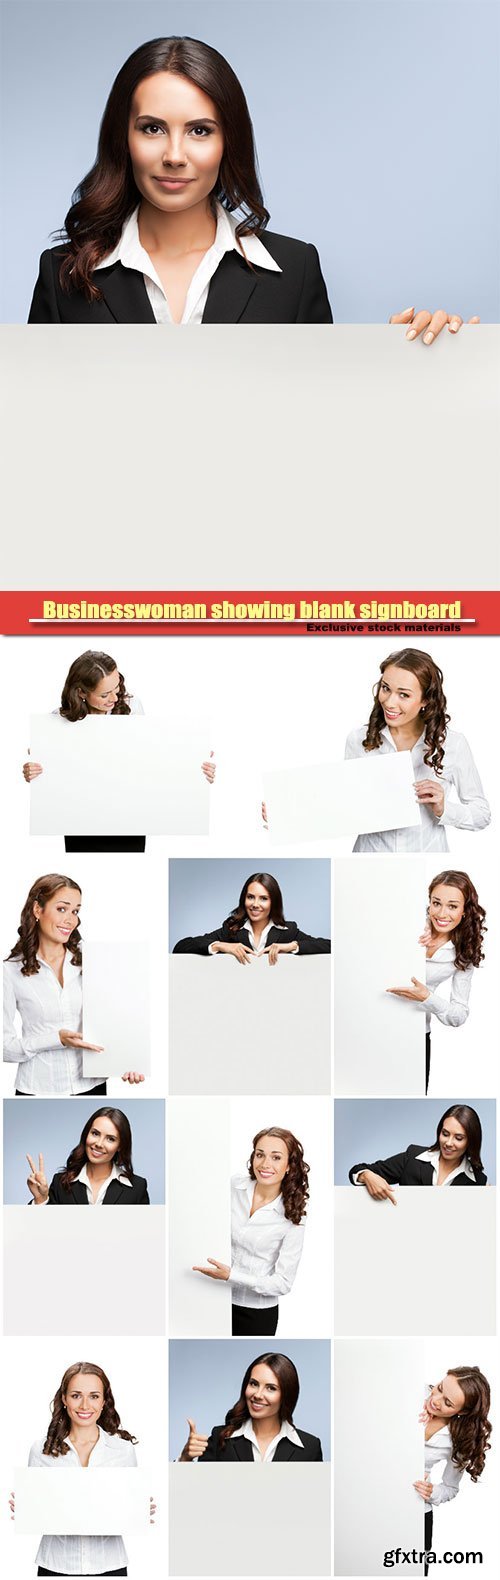 Businesswoman showing blank signboard